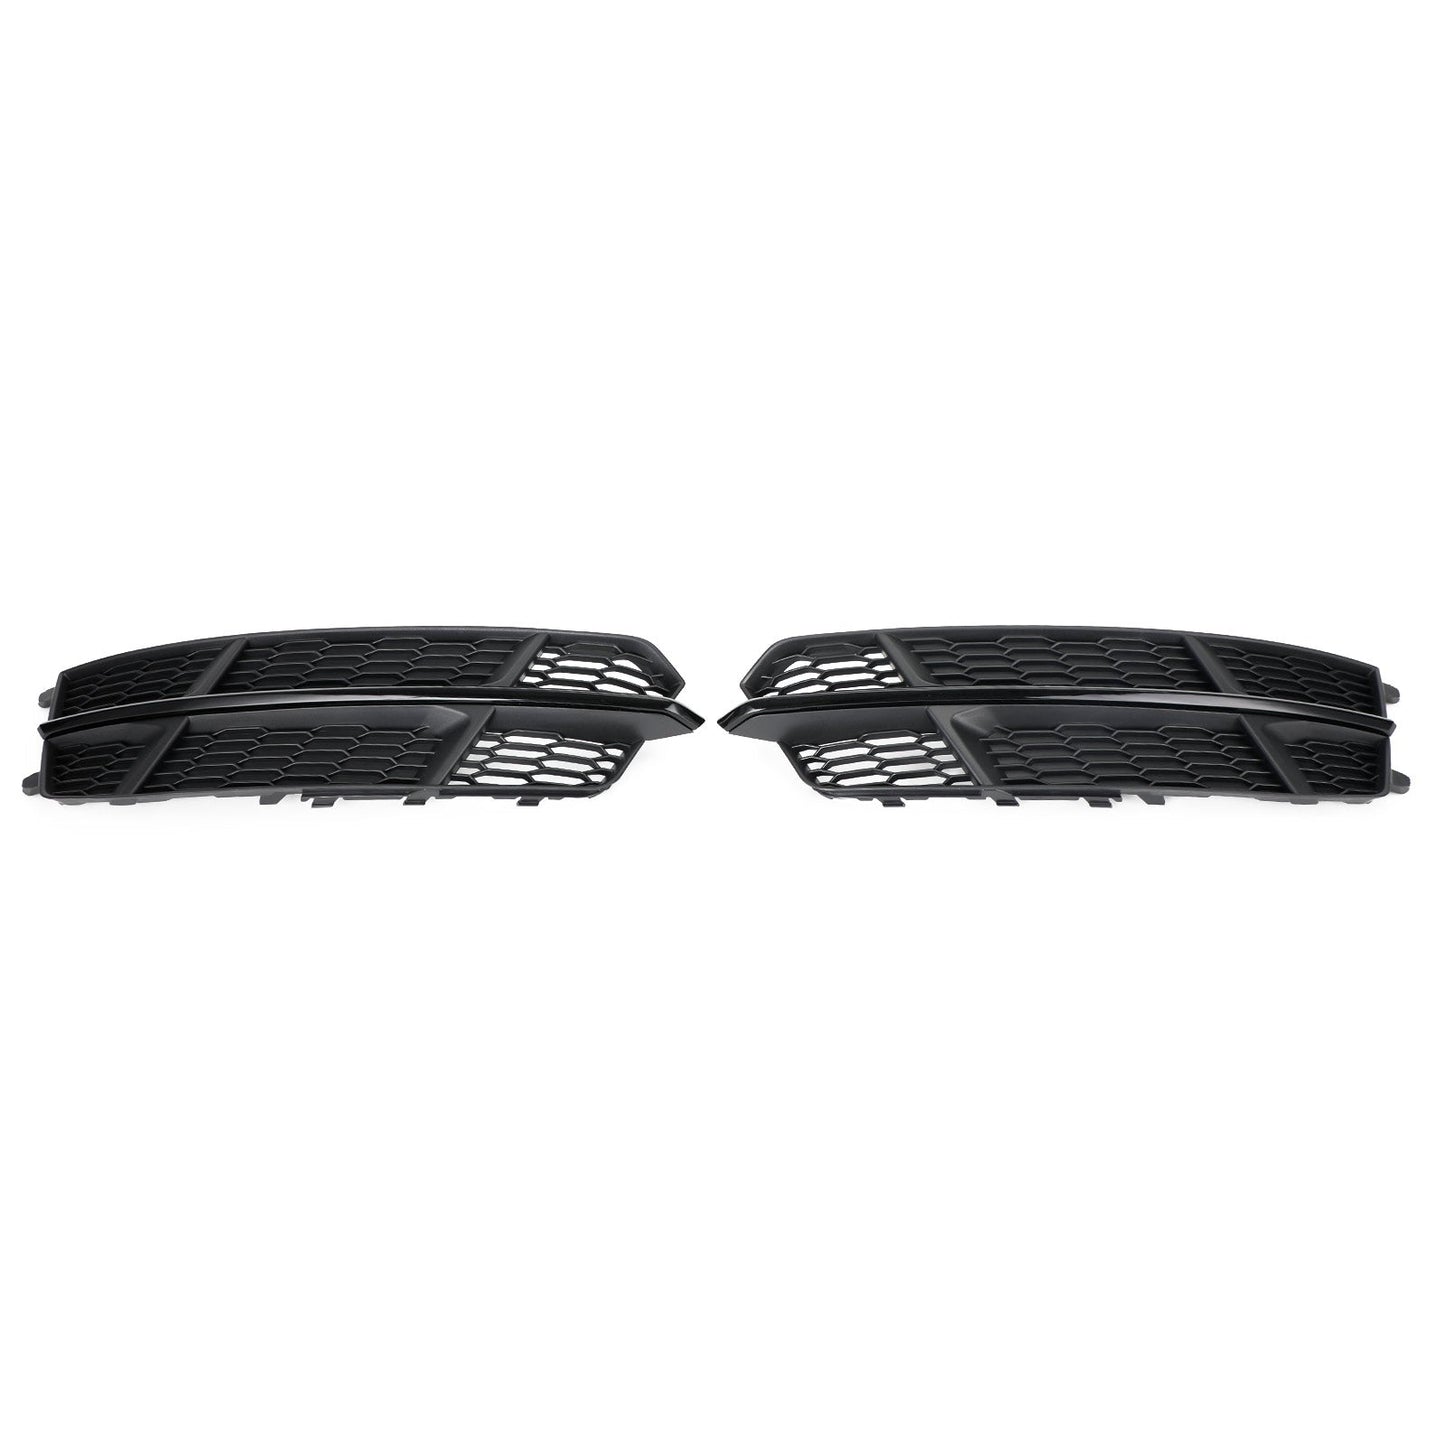 2016-2018 Audi A6 C7 S-Line Front Bumper Lower Grille Grill Matt Black